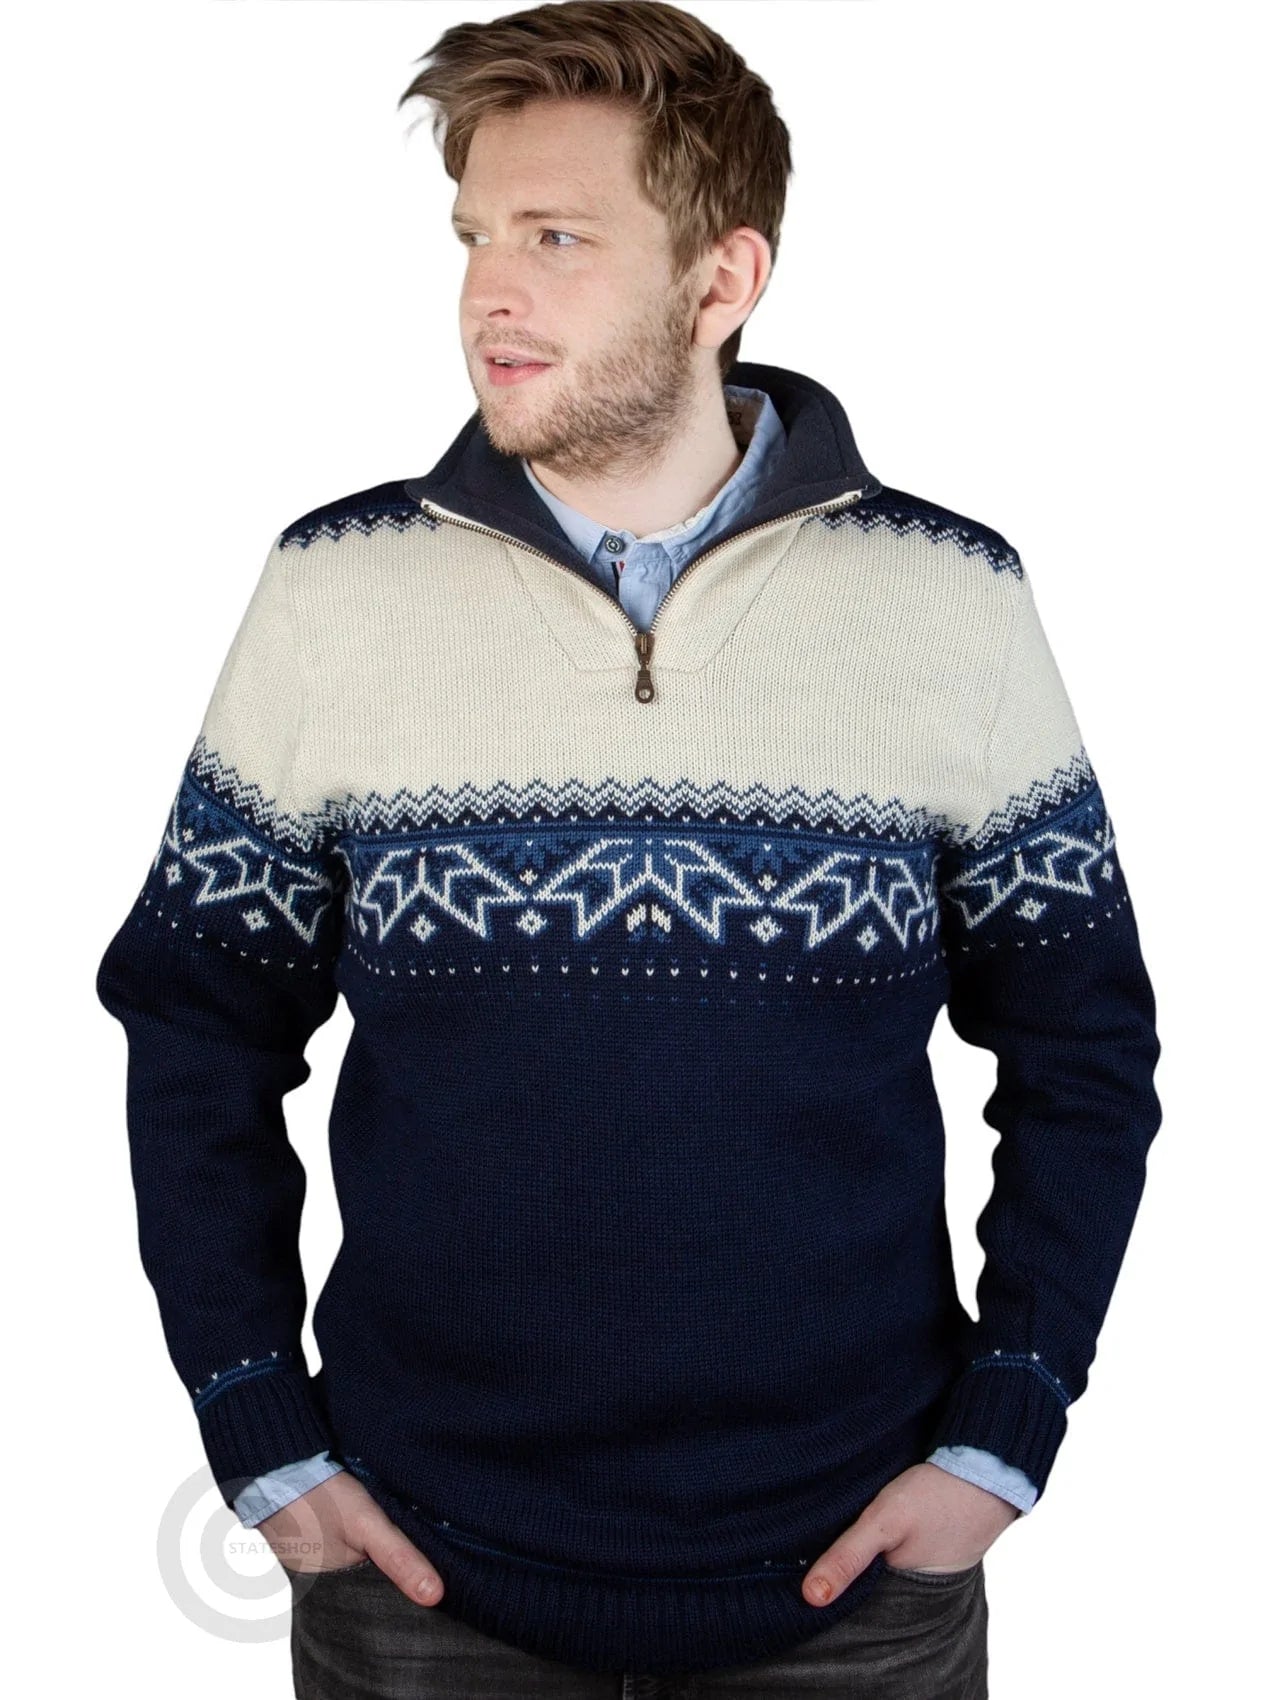 NorfindeNordic sweater with traditional star pattern, darkblue